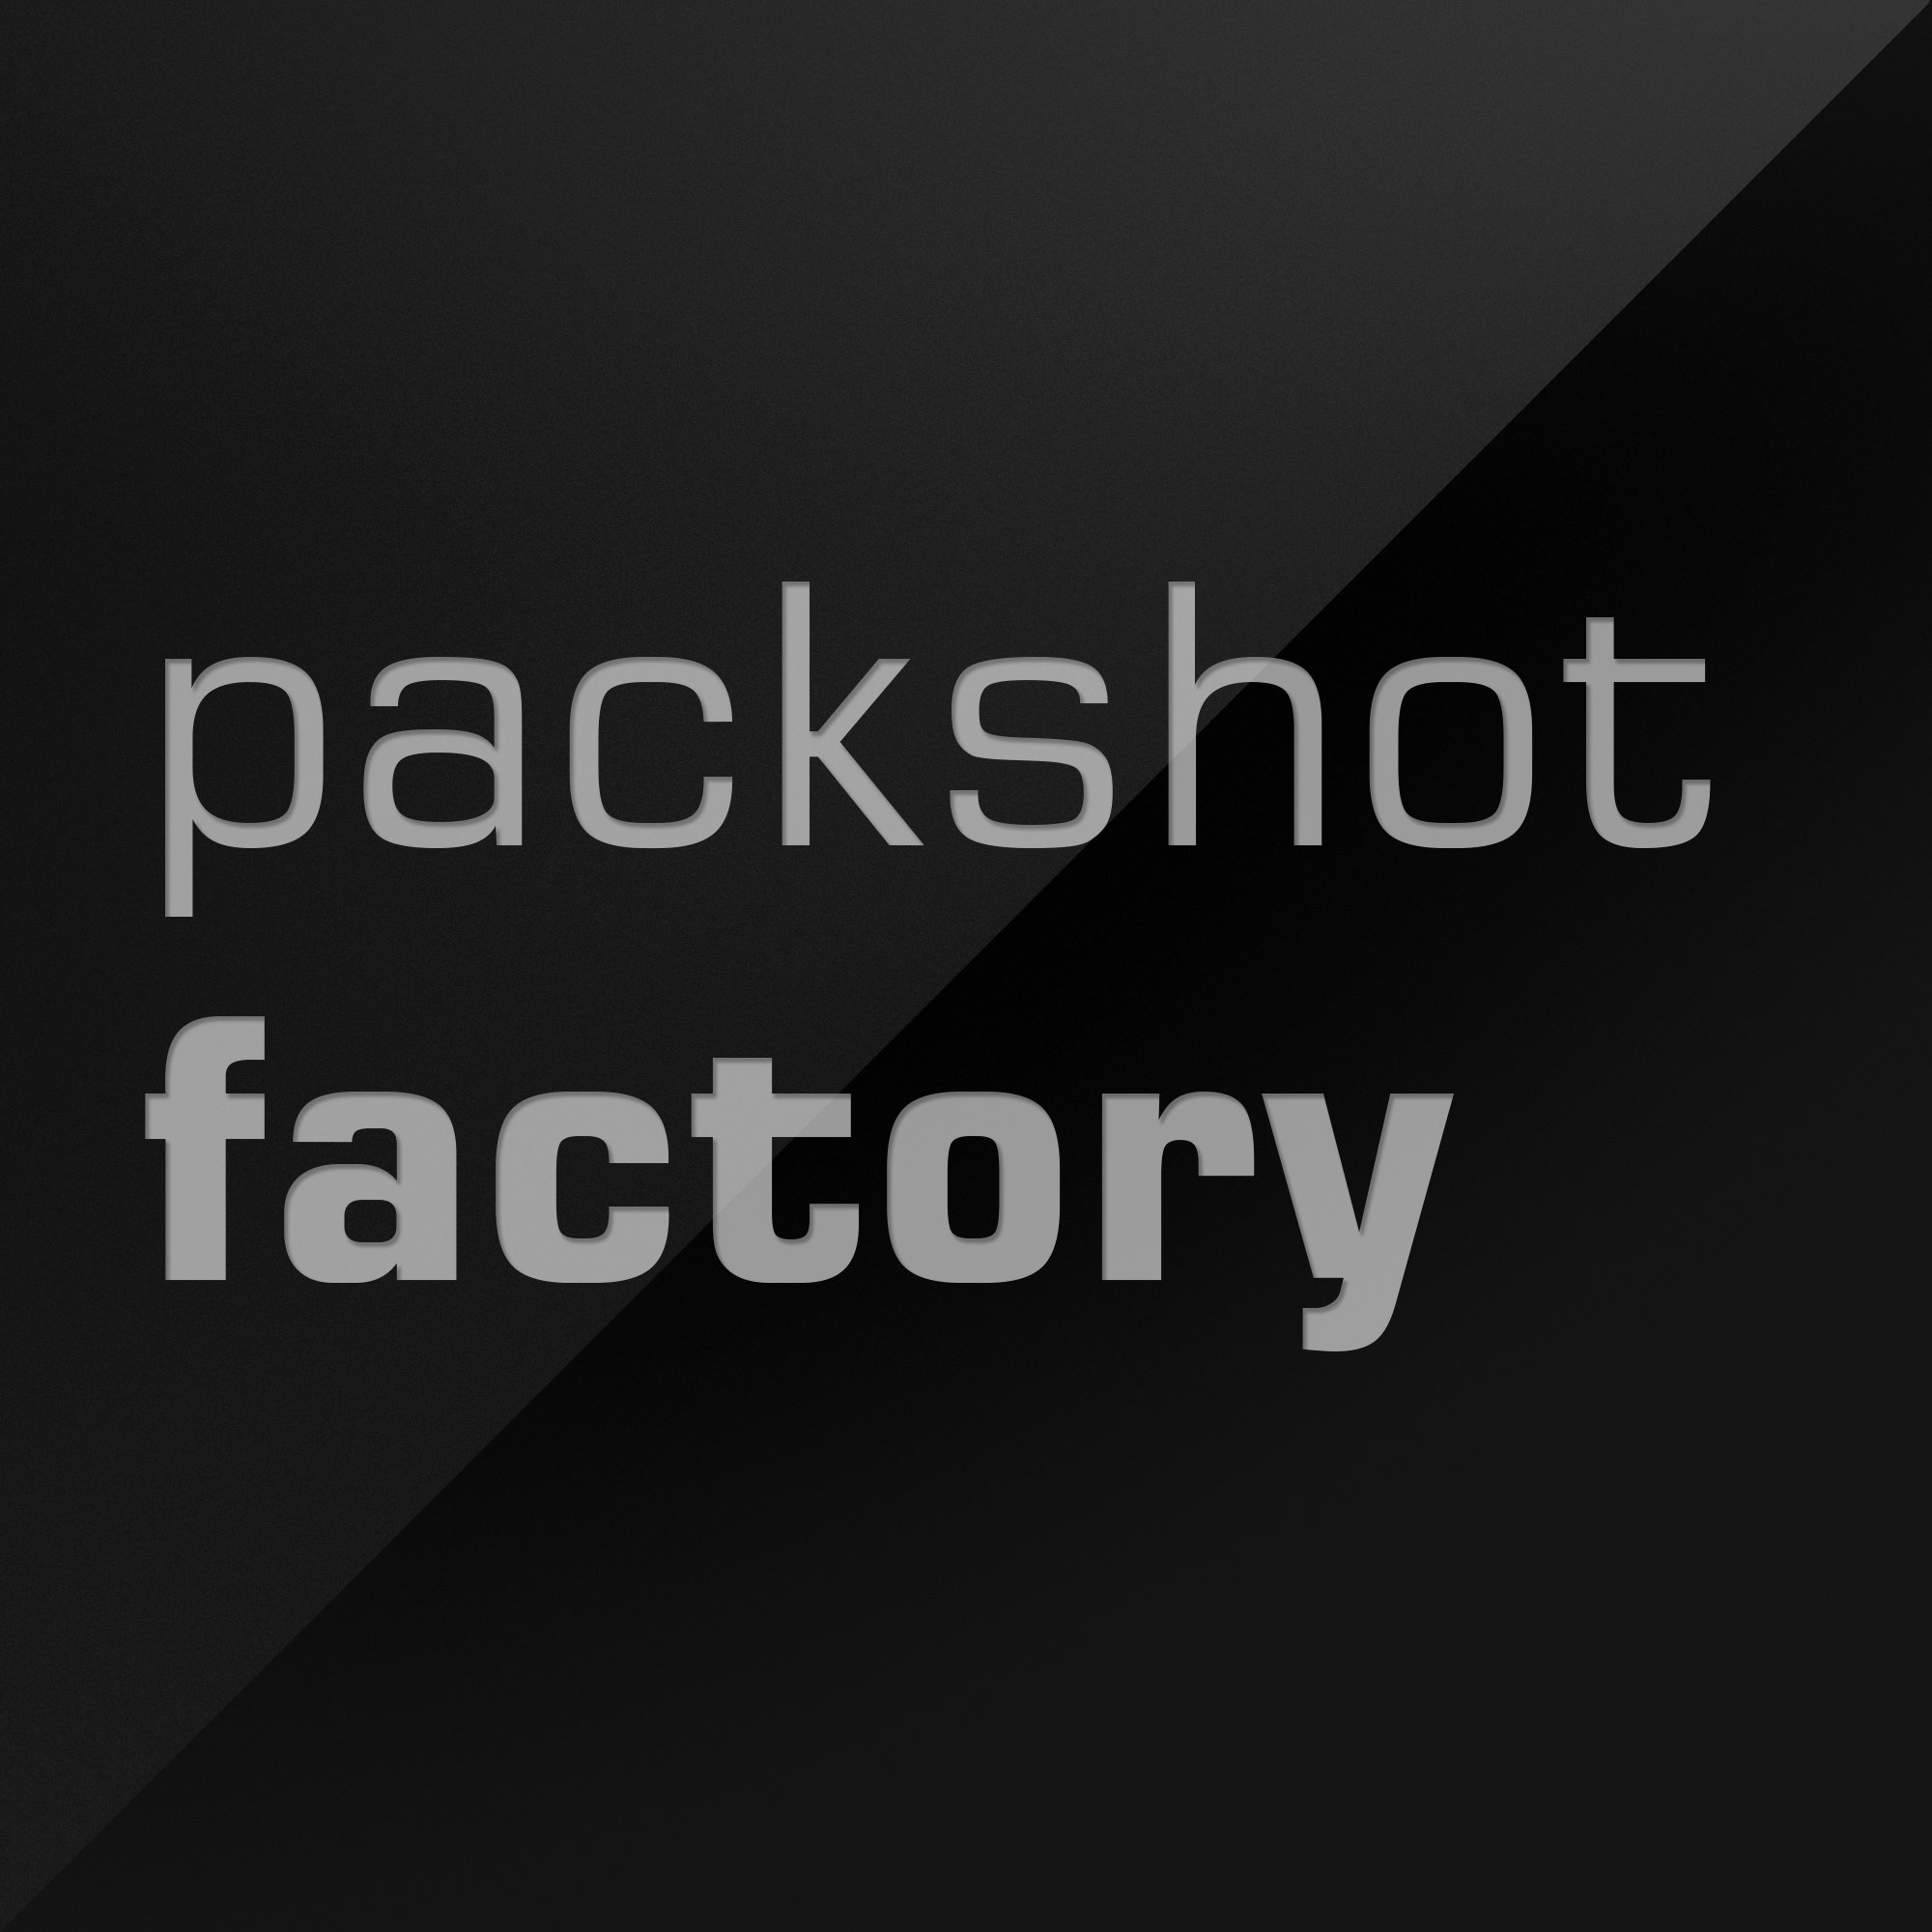 Packshot Factory - London